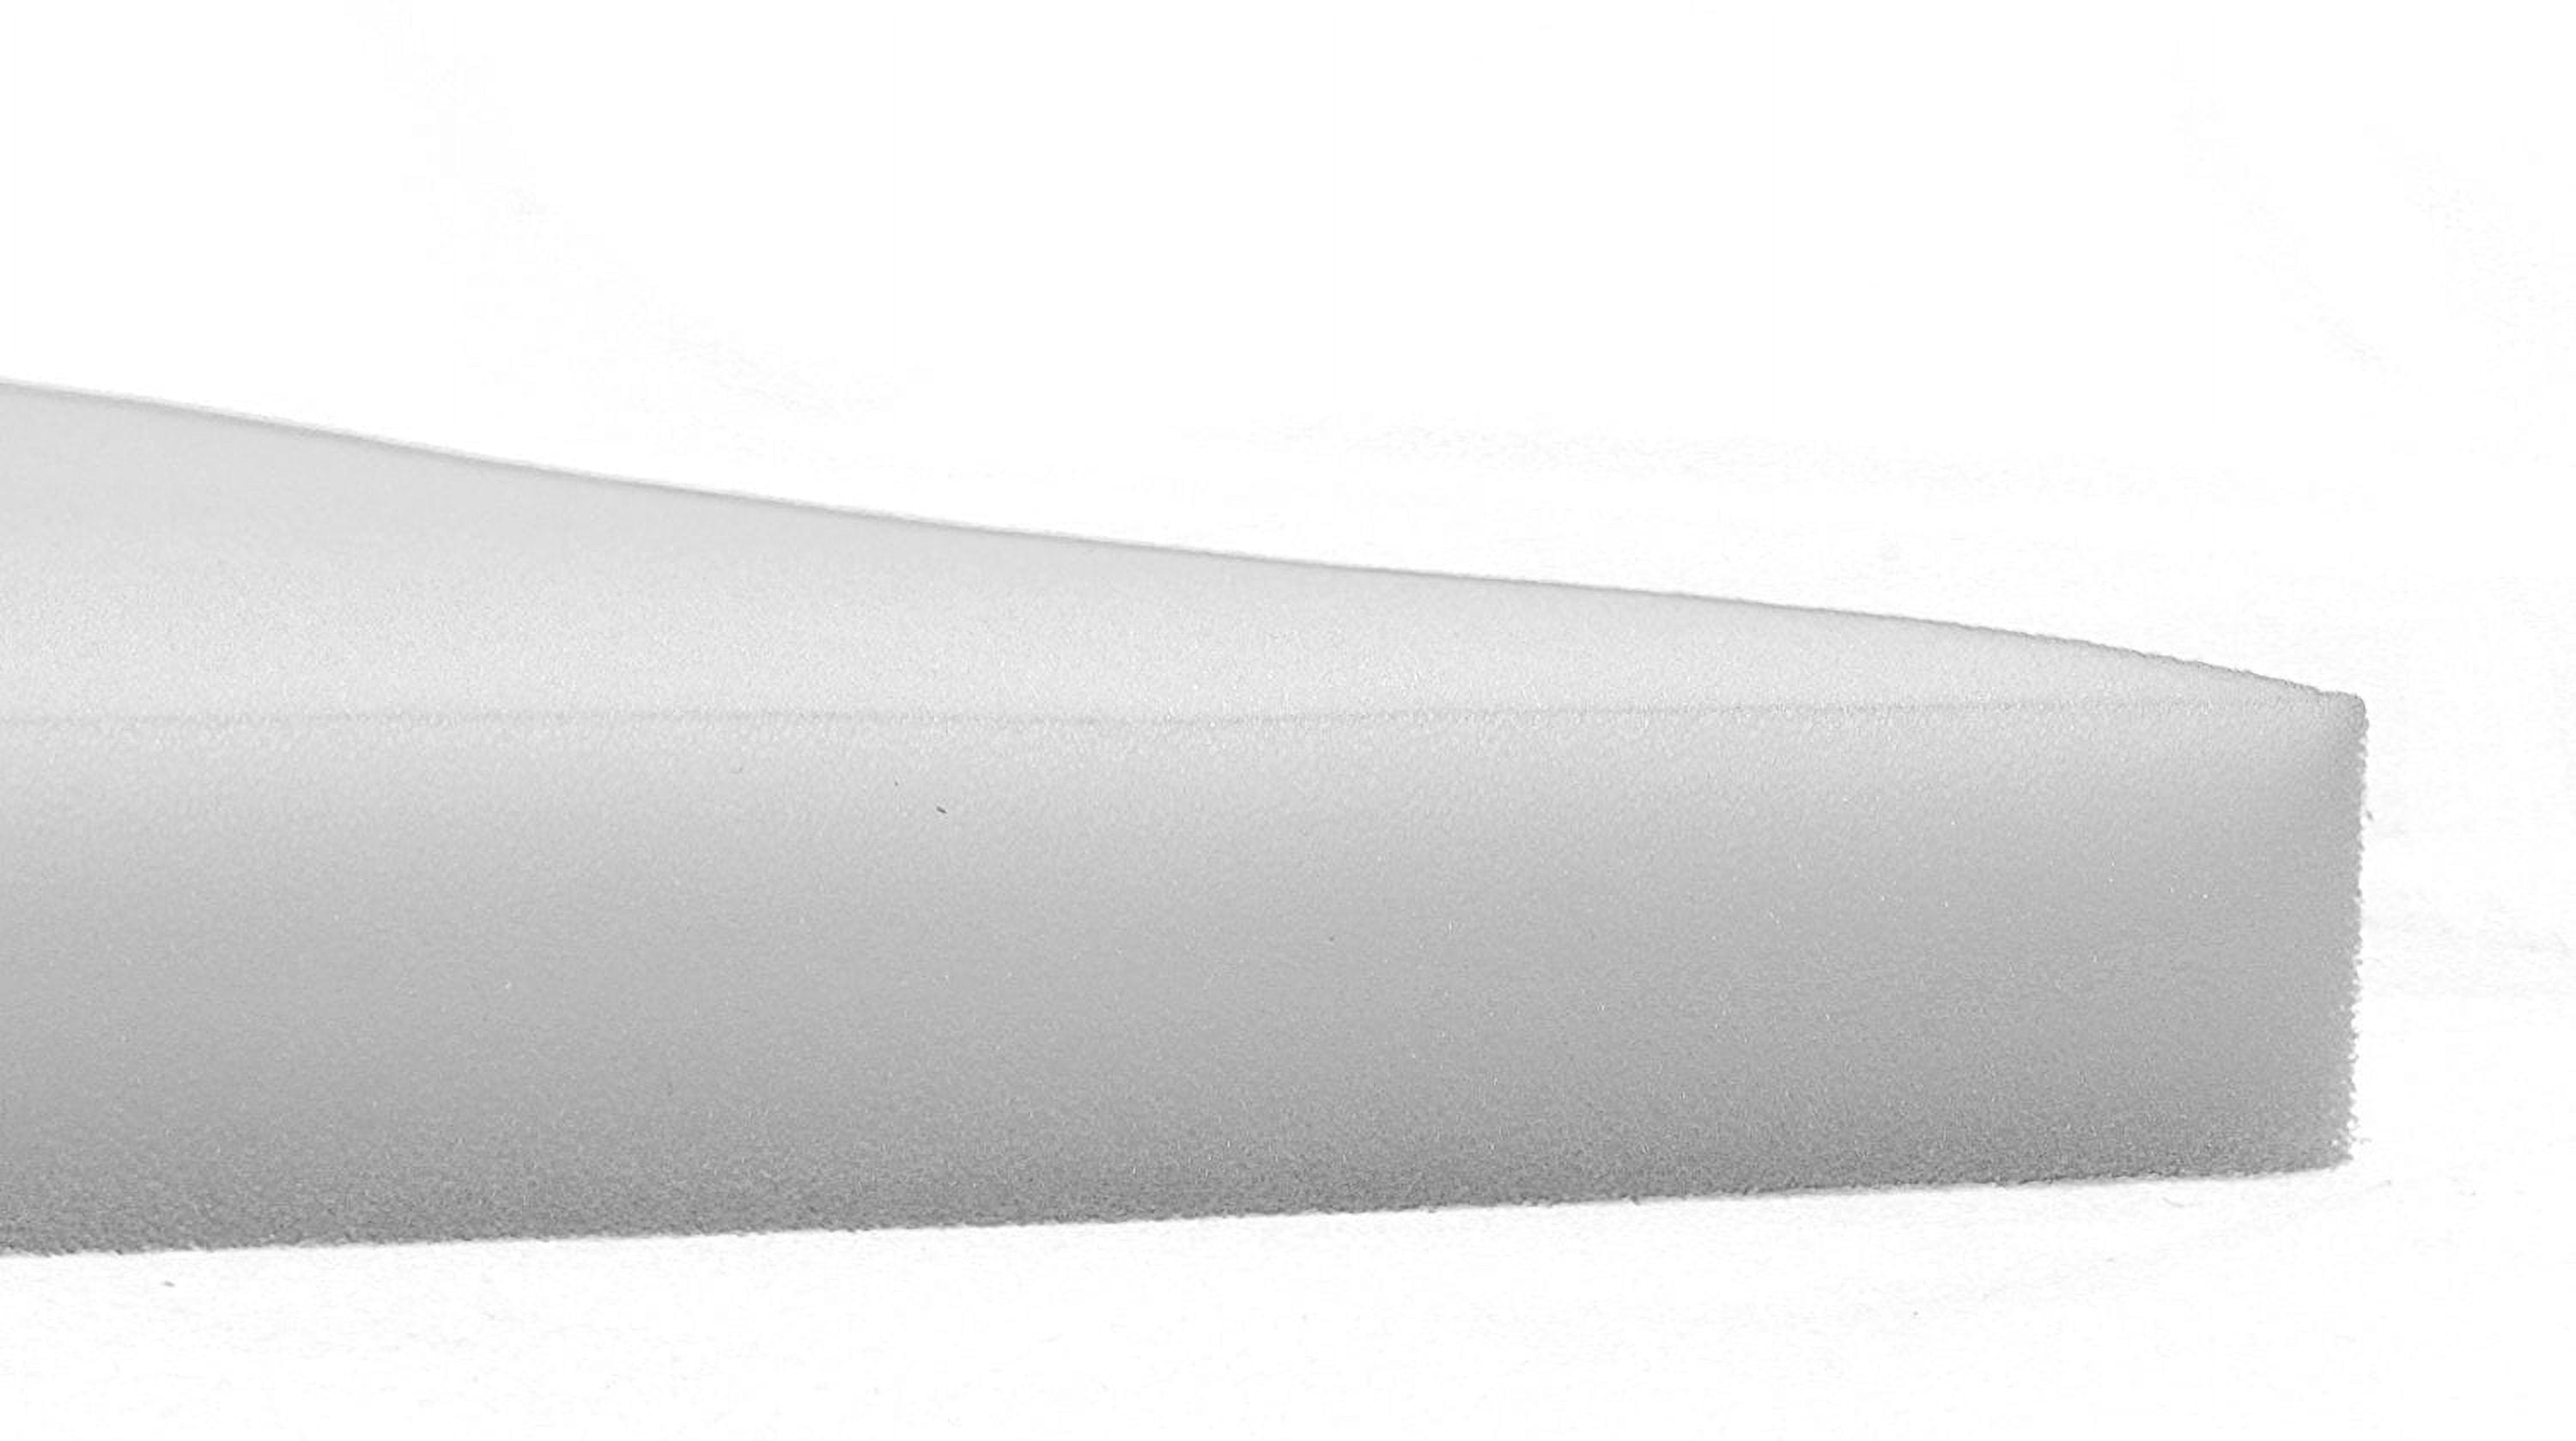 AK TRADING CO. High Density Upholstery Foam Cushion, Polyurethane Foam  Sheet - Made in USA - 1 H x 24 W x 72 L 